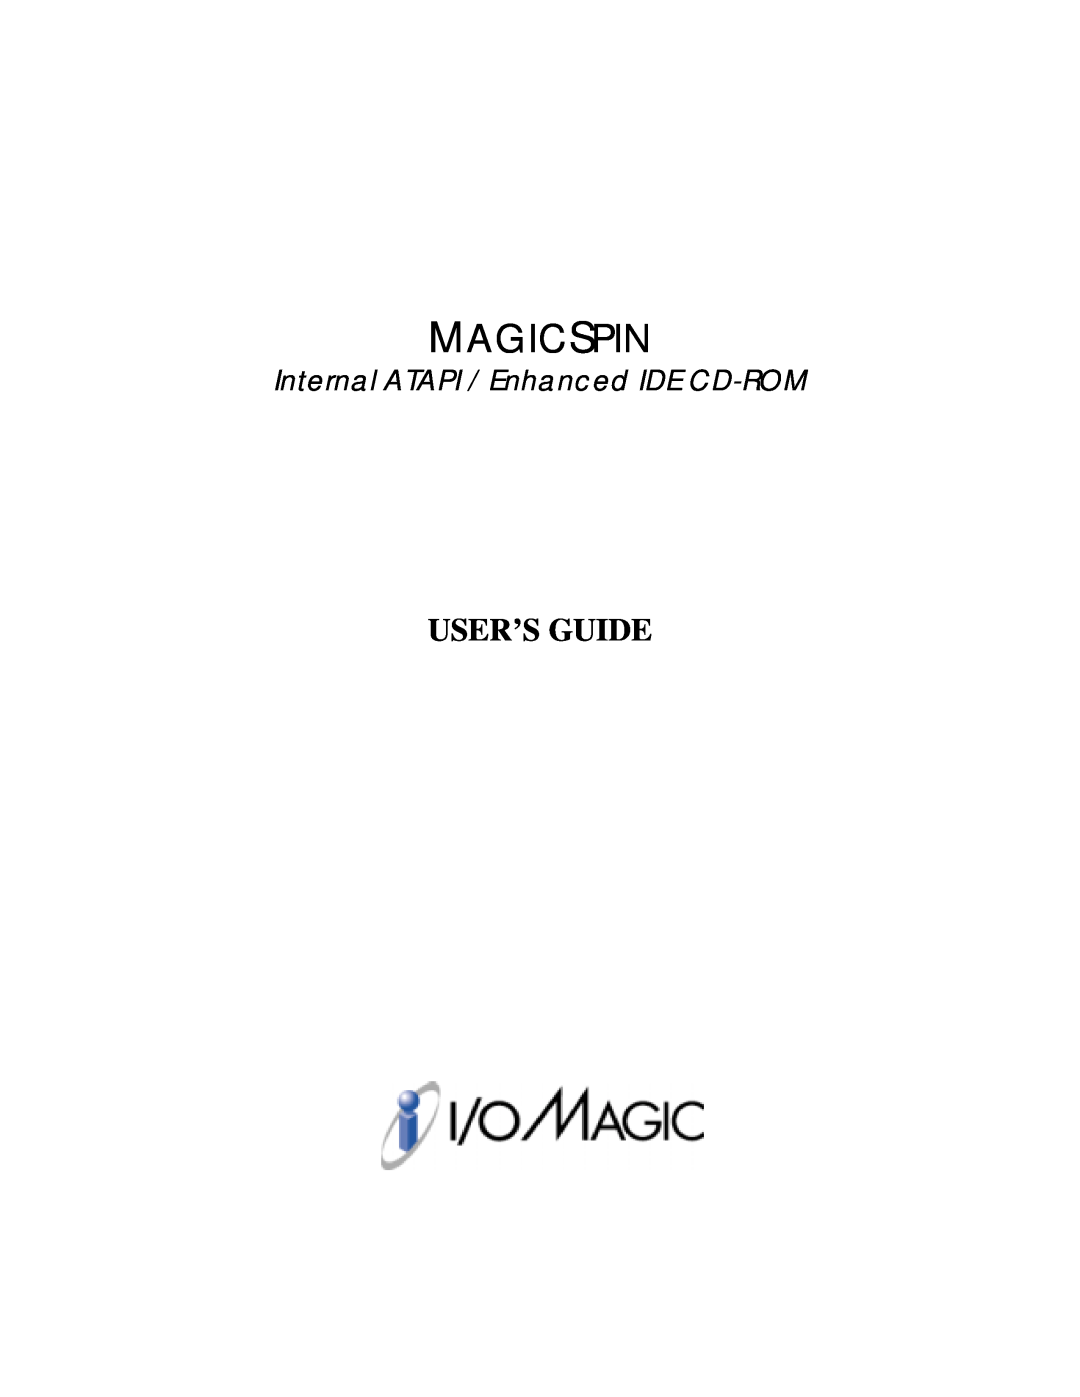 I/O Magic MagicSpin manual User’S Guide, Magicspin, Internal ATAPI / Enhanced IDE CD-ROM 